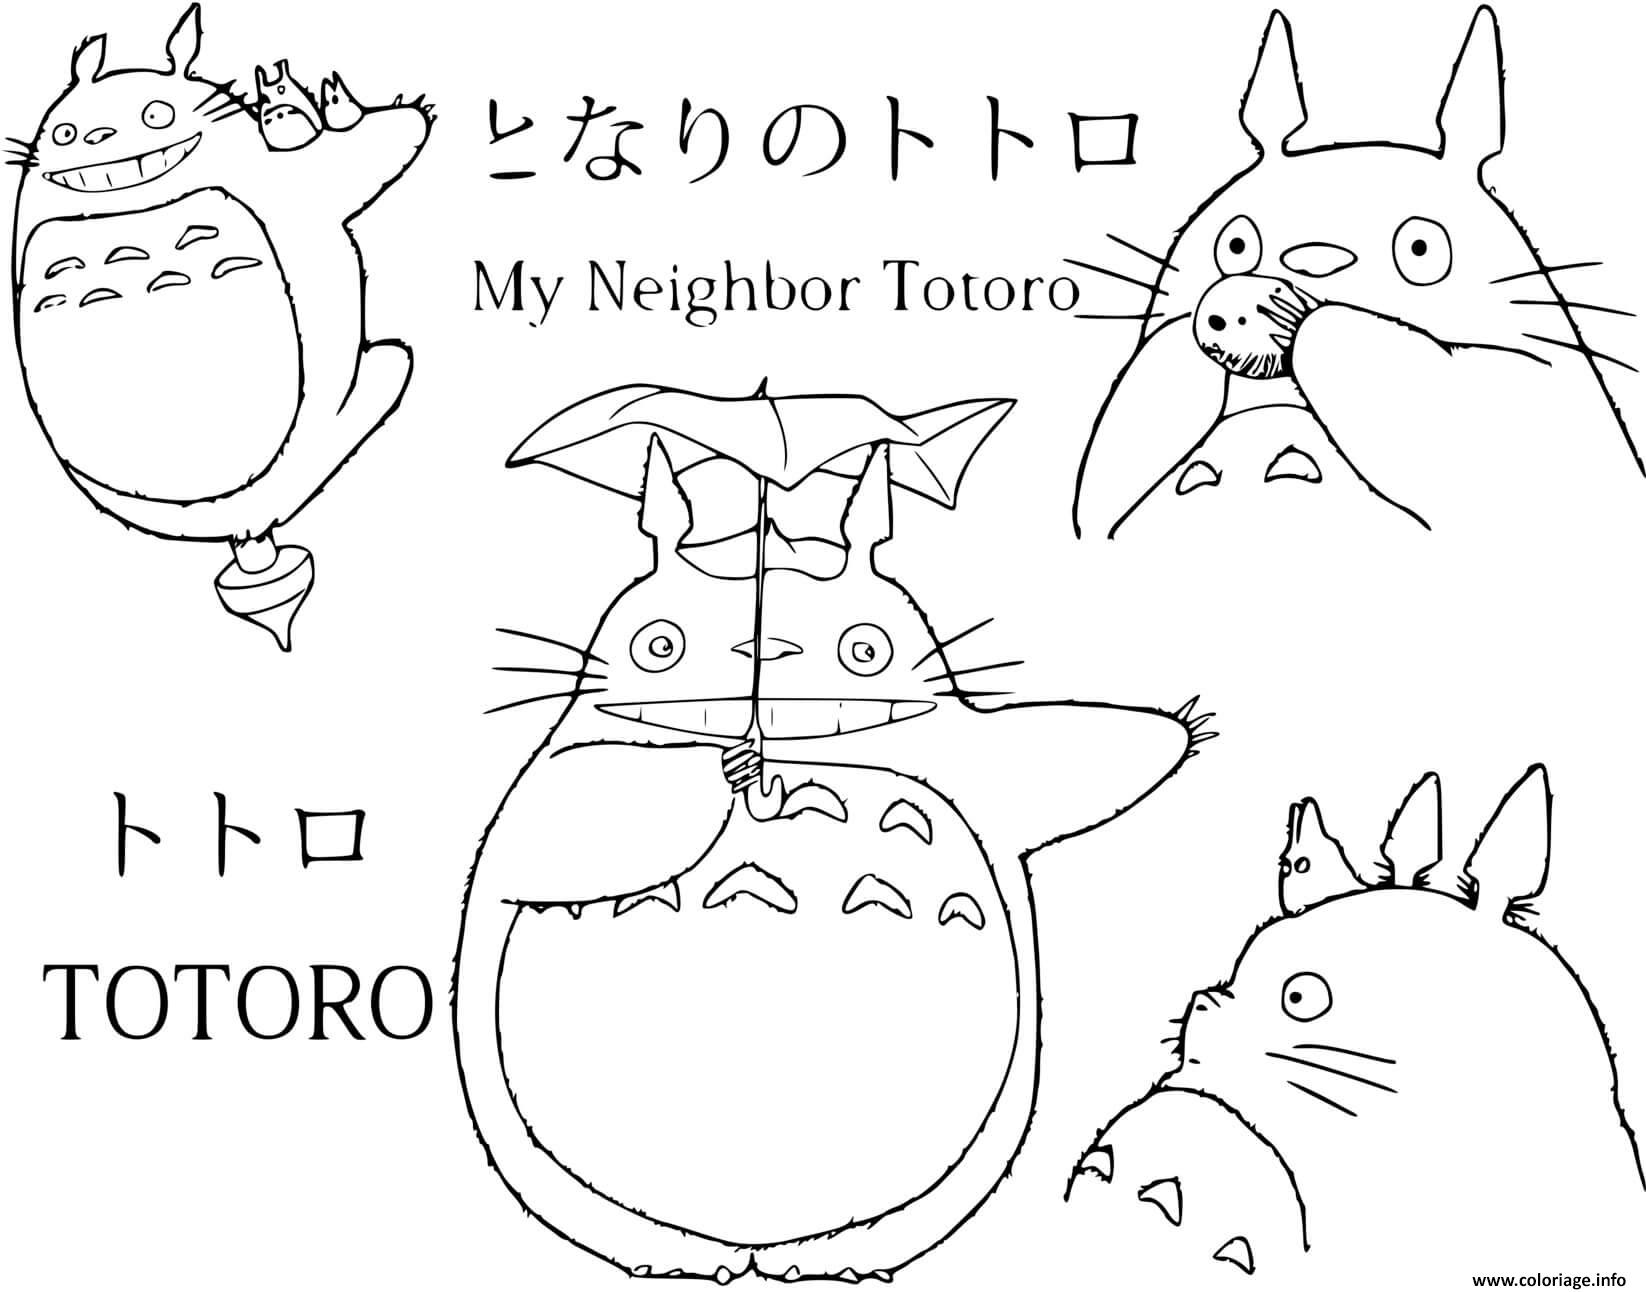 Dessin My Neighbor Totoros dessin anime japonais Coloriage Gratuit à Imprimer